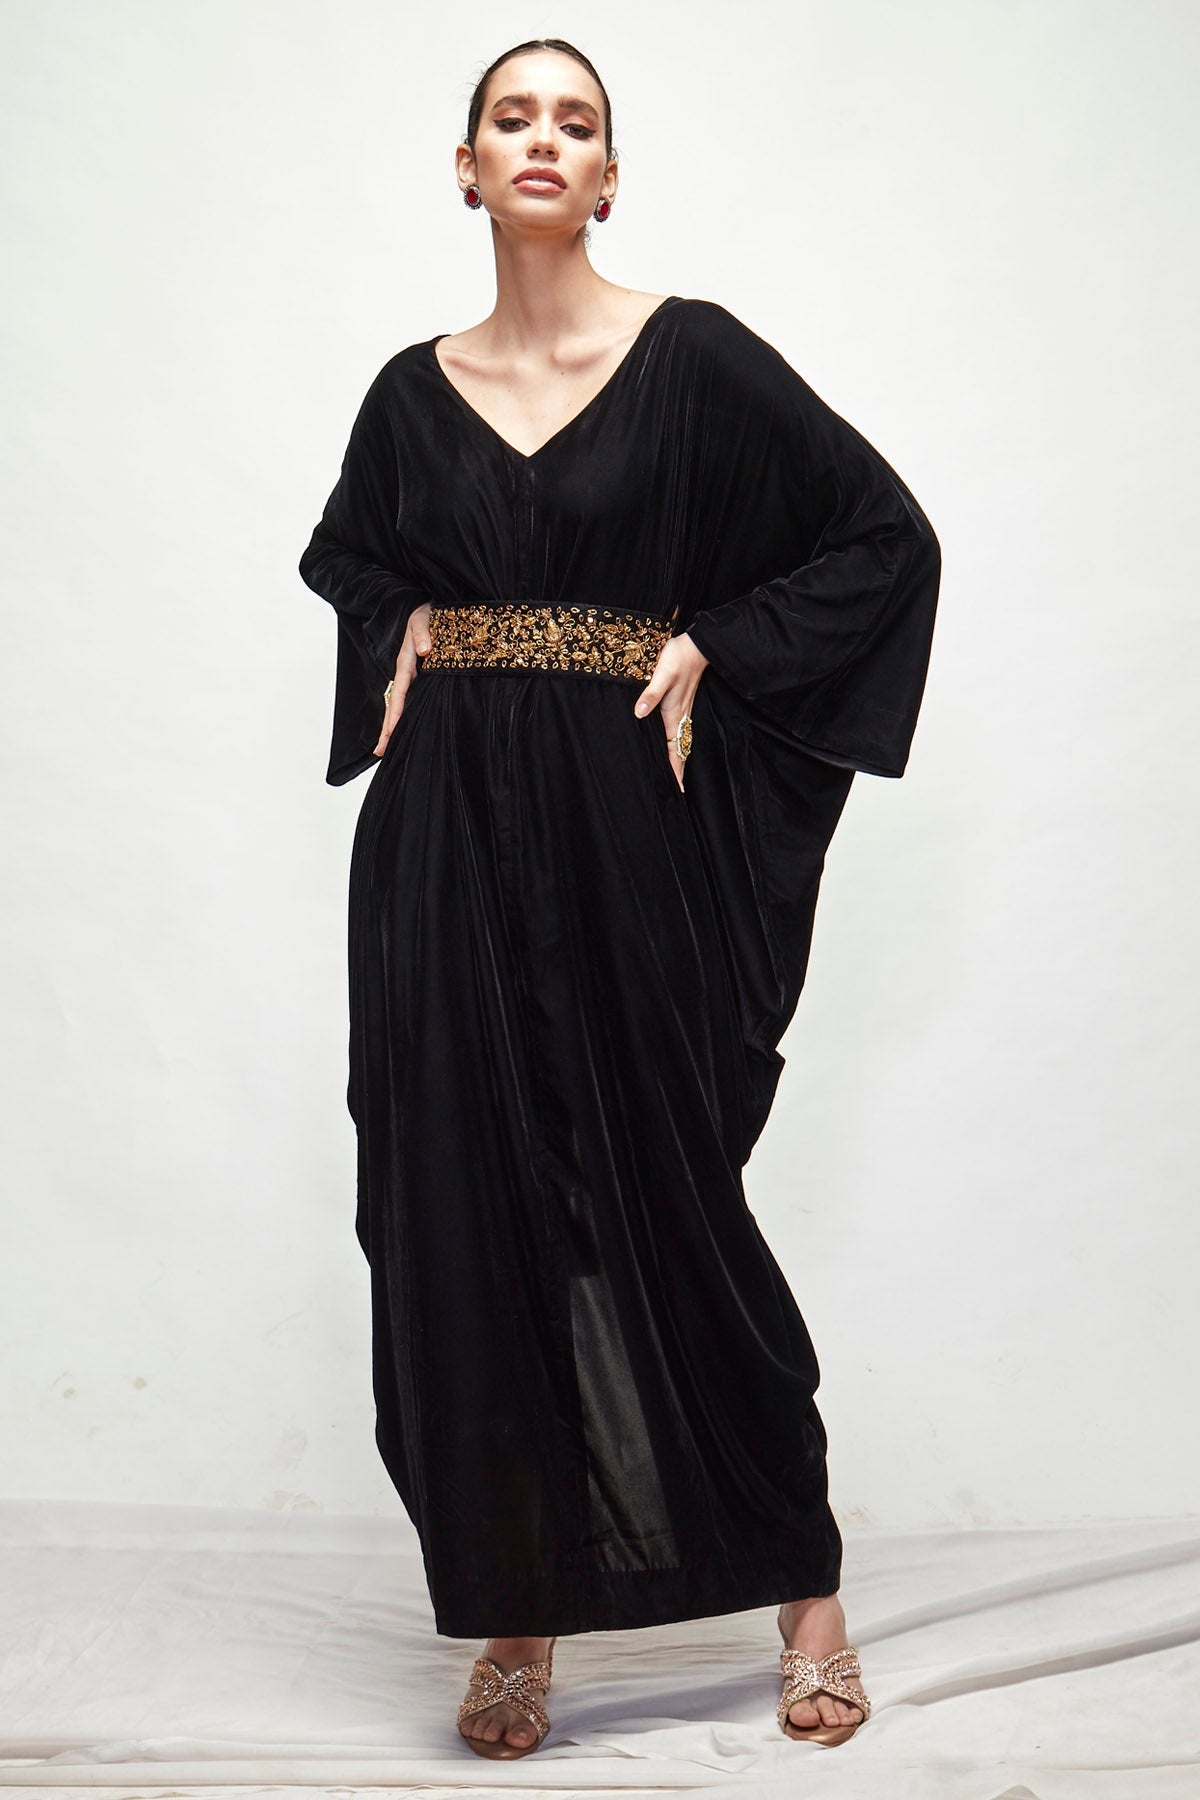 Designer Ranian Black velvet kaftan with extended cowl on the sides for a relaxed fit, back slit and zardosi embroidered belt For women Online at ScrollnShops